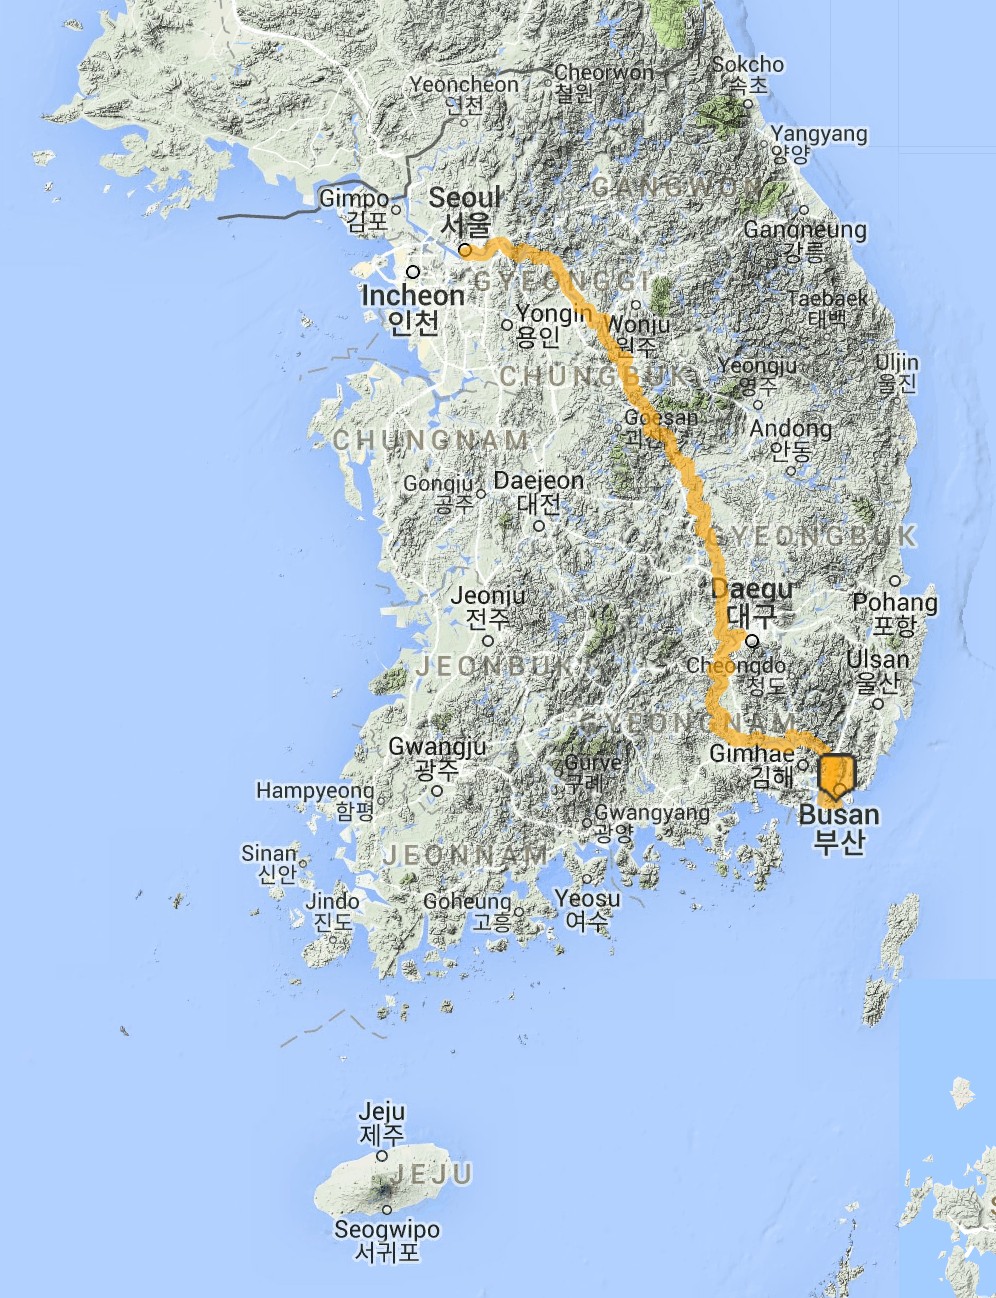 Korea - Seoul to Busan 4 river cycle path